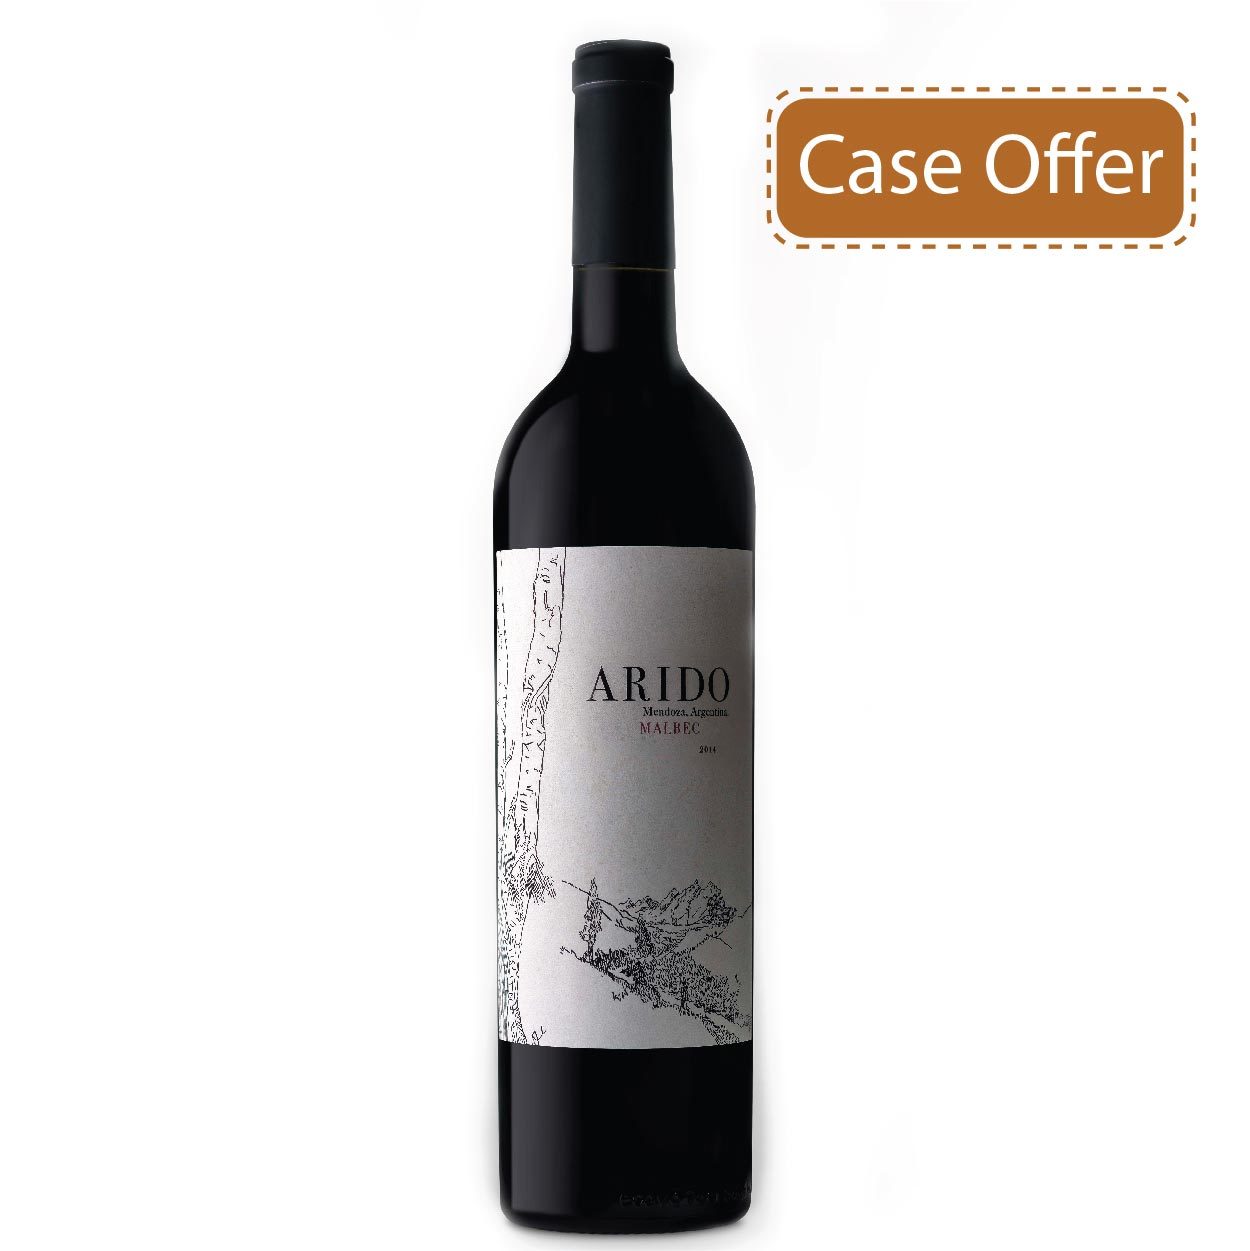 Red Wine - Arido Malbec 2015/2017 Case Offer - Argentina*